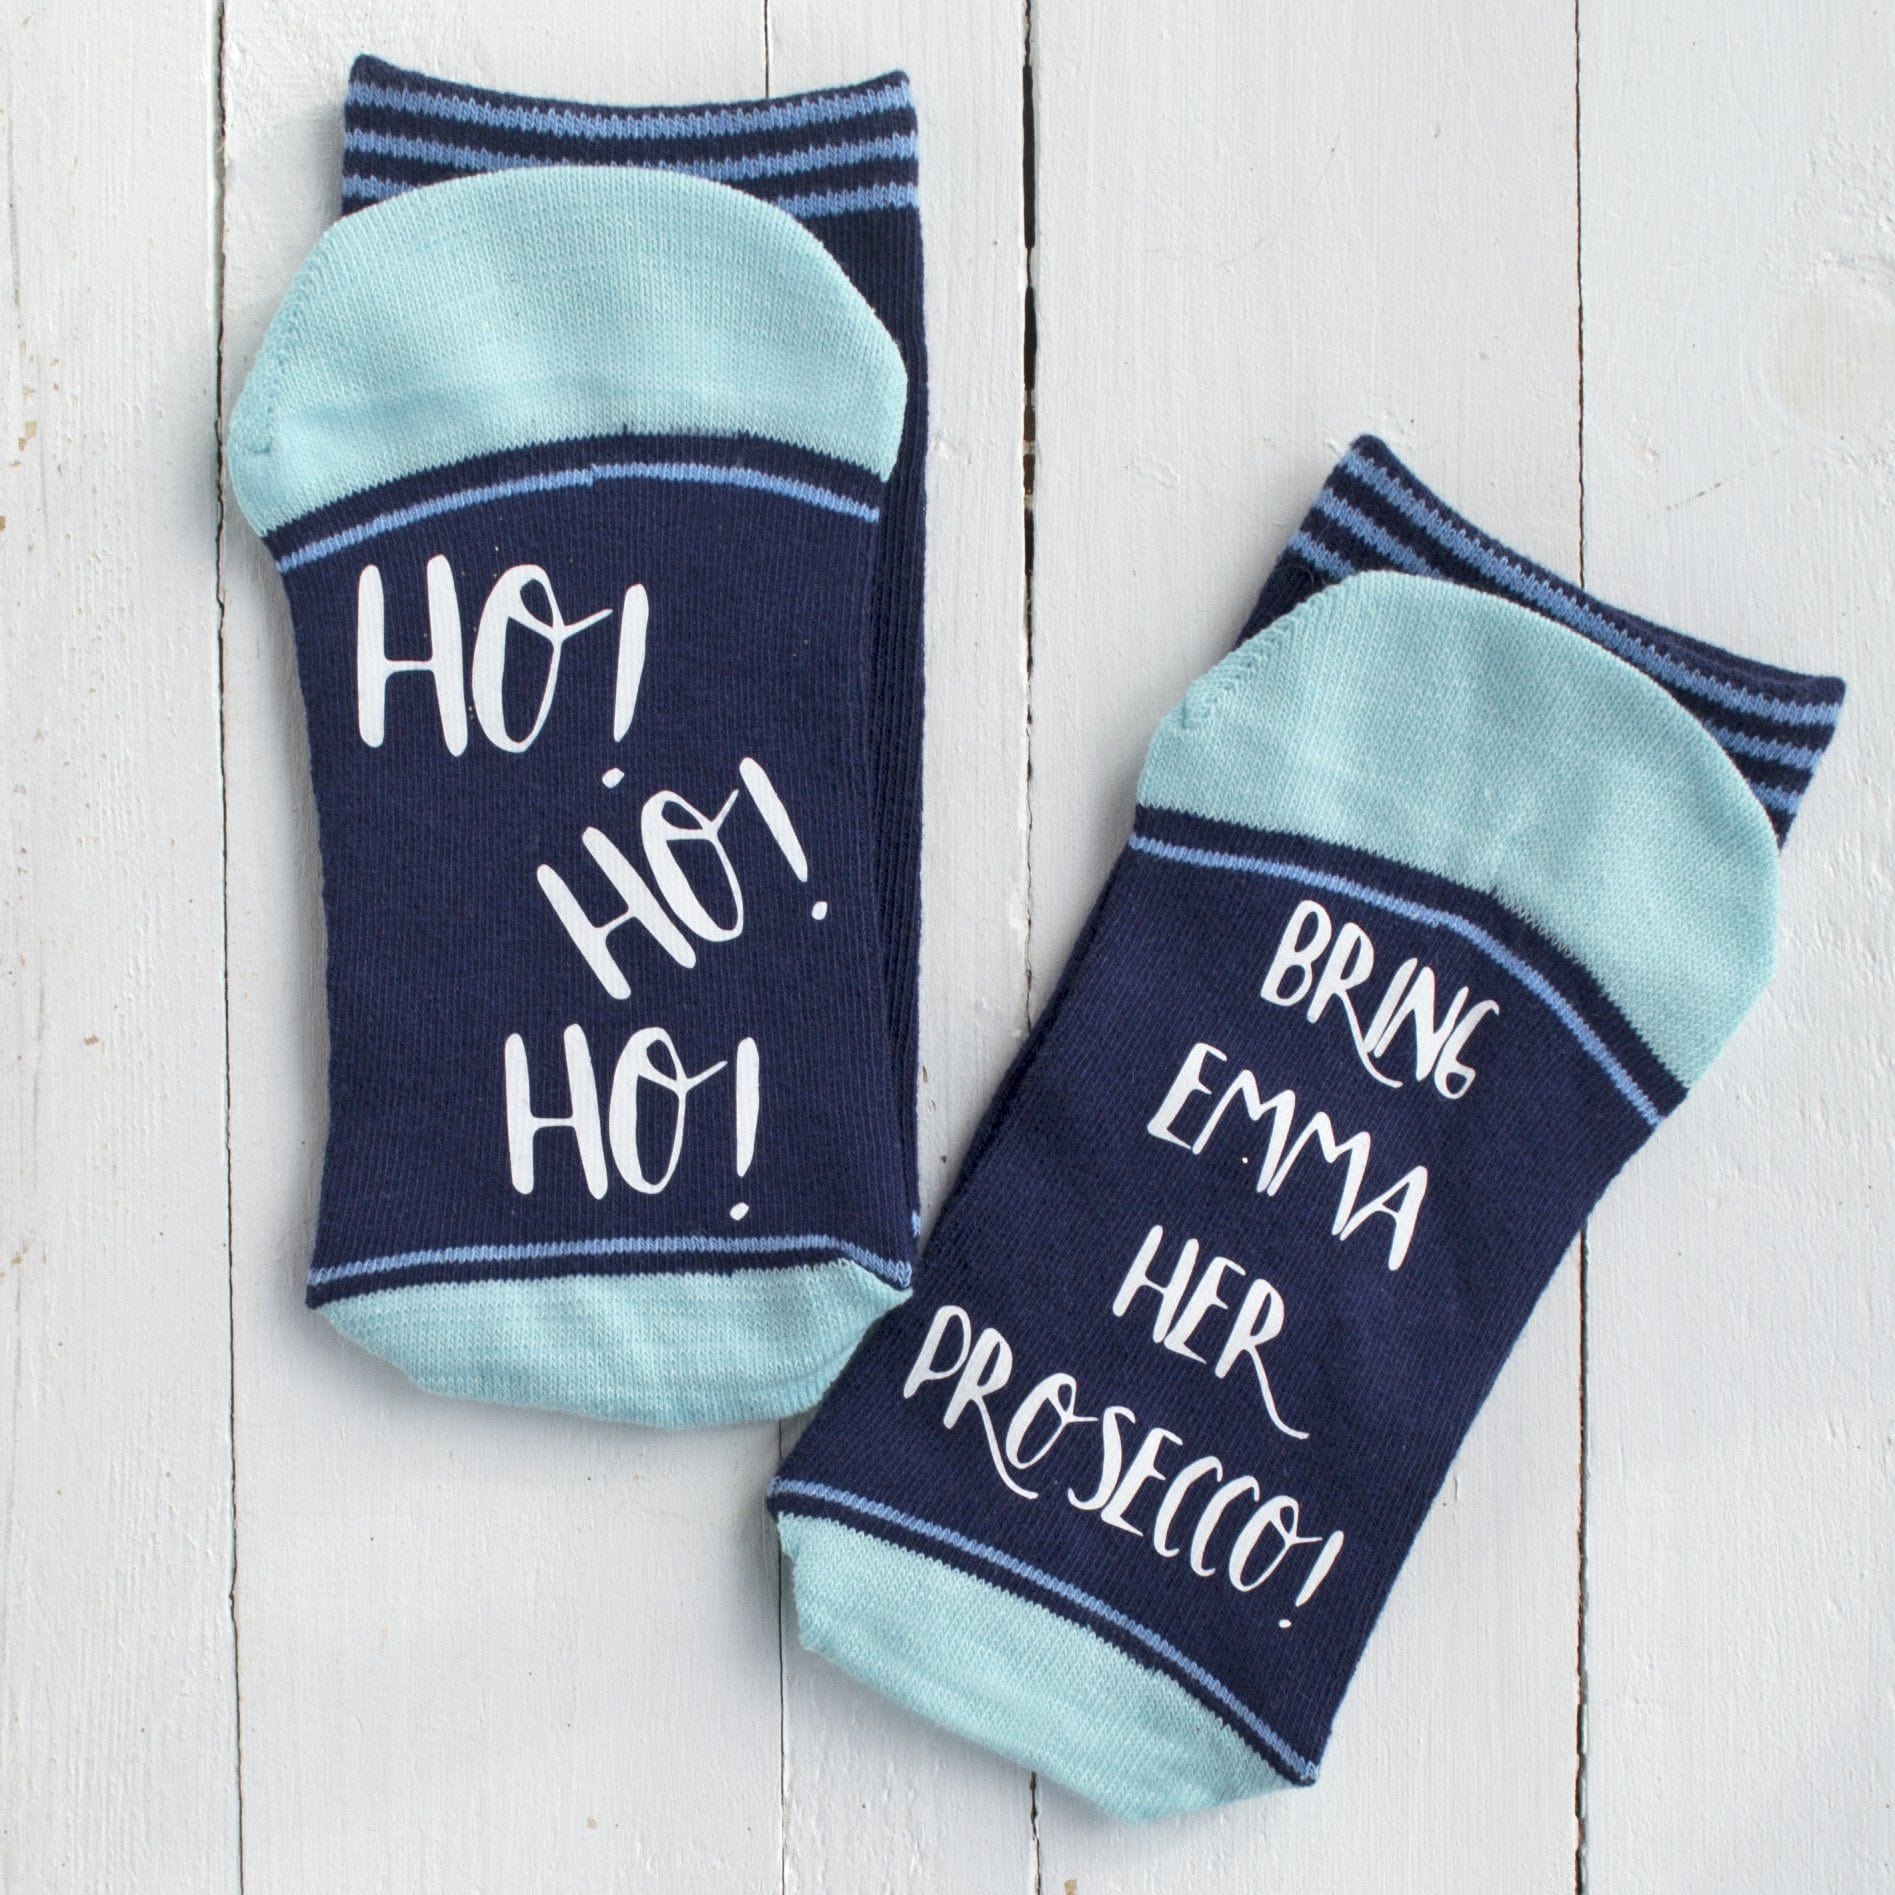 Ho Ho Ho Prosecco Socks!, Socks, - ALPHS 